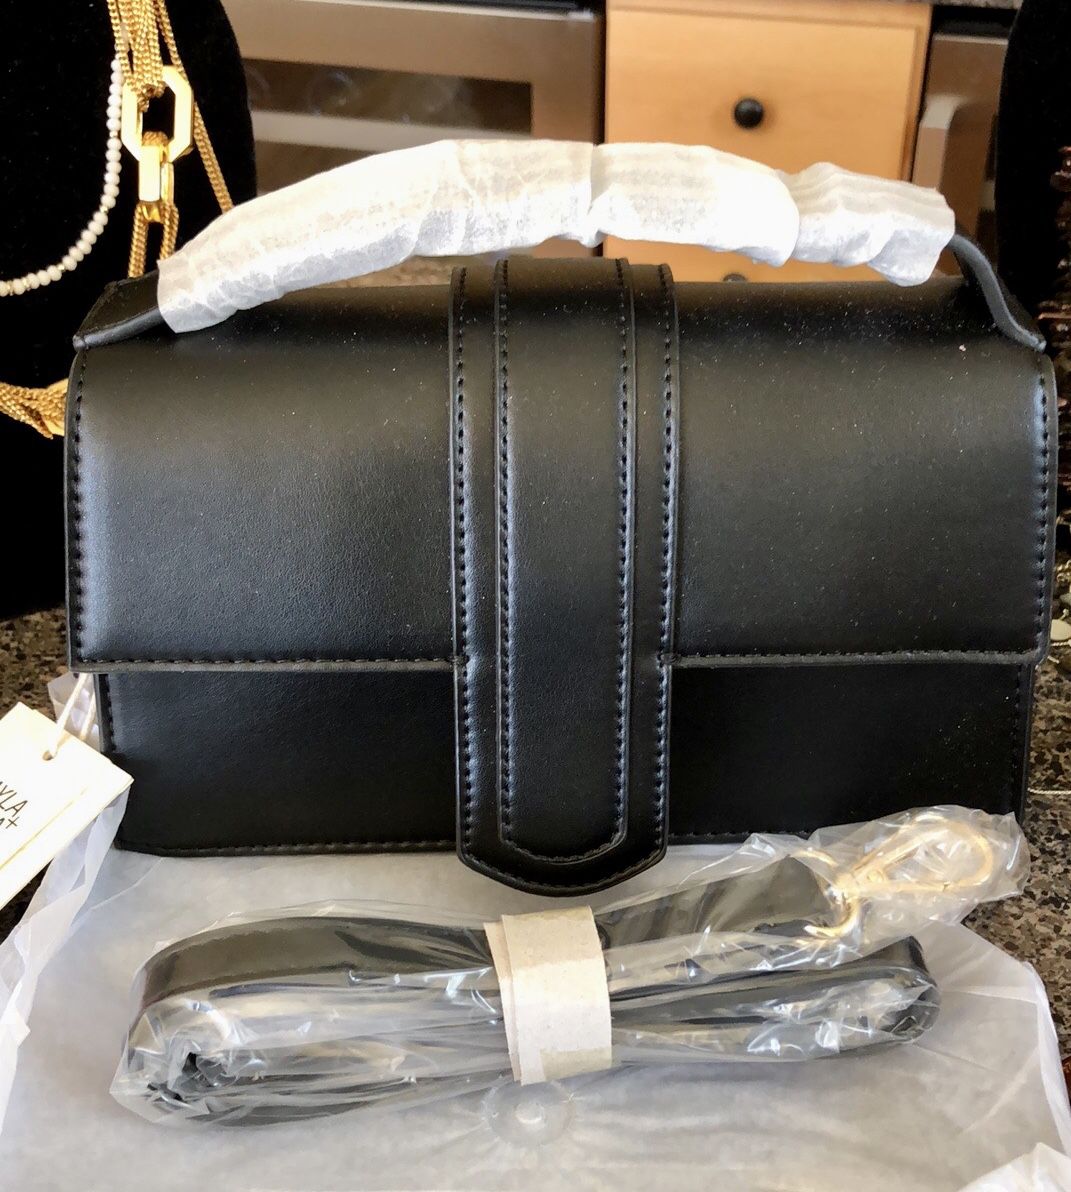 Black Vegan Leather Bag